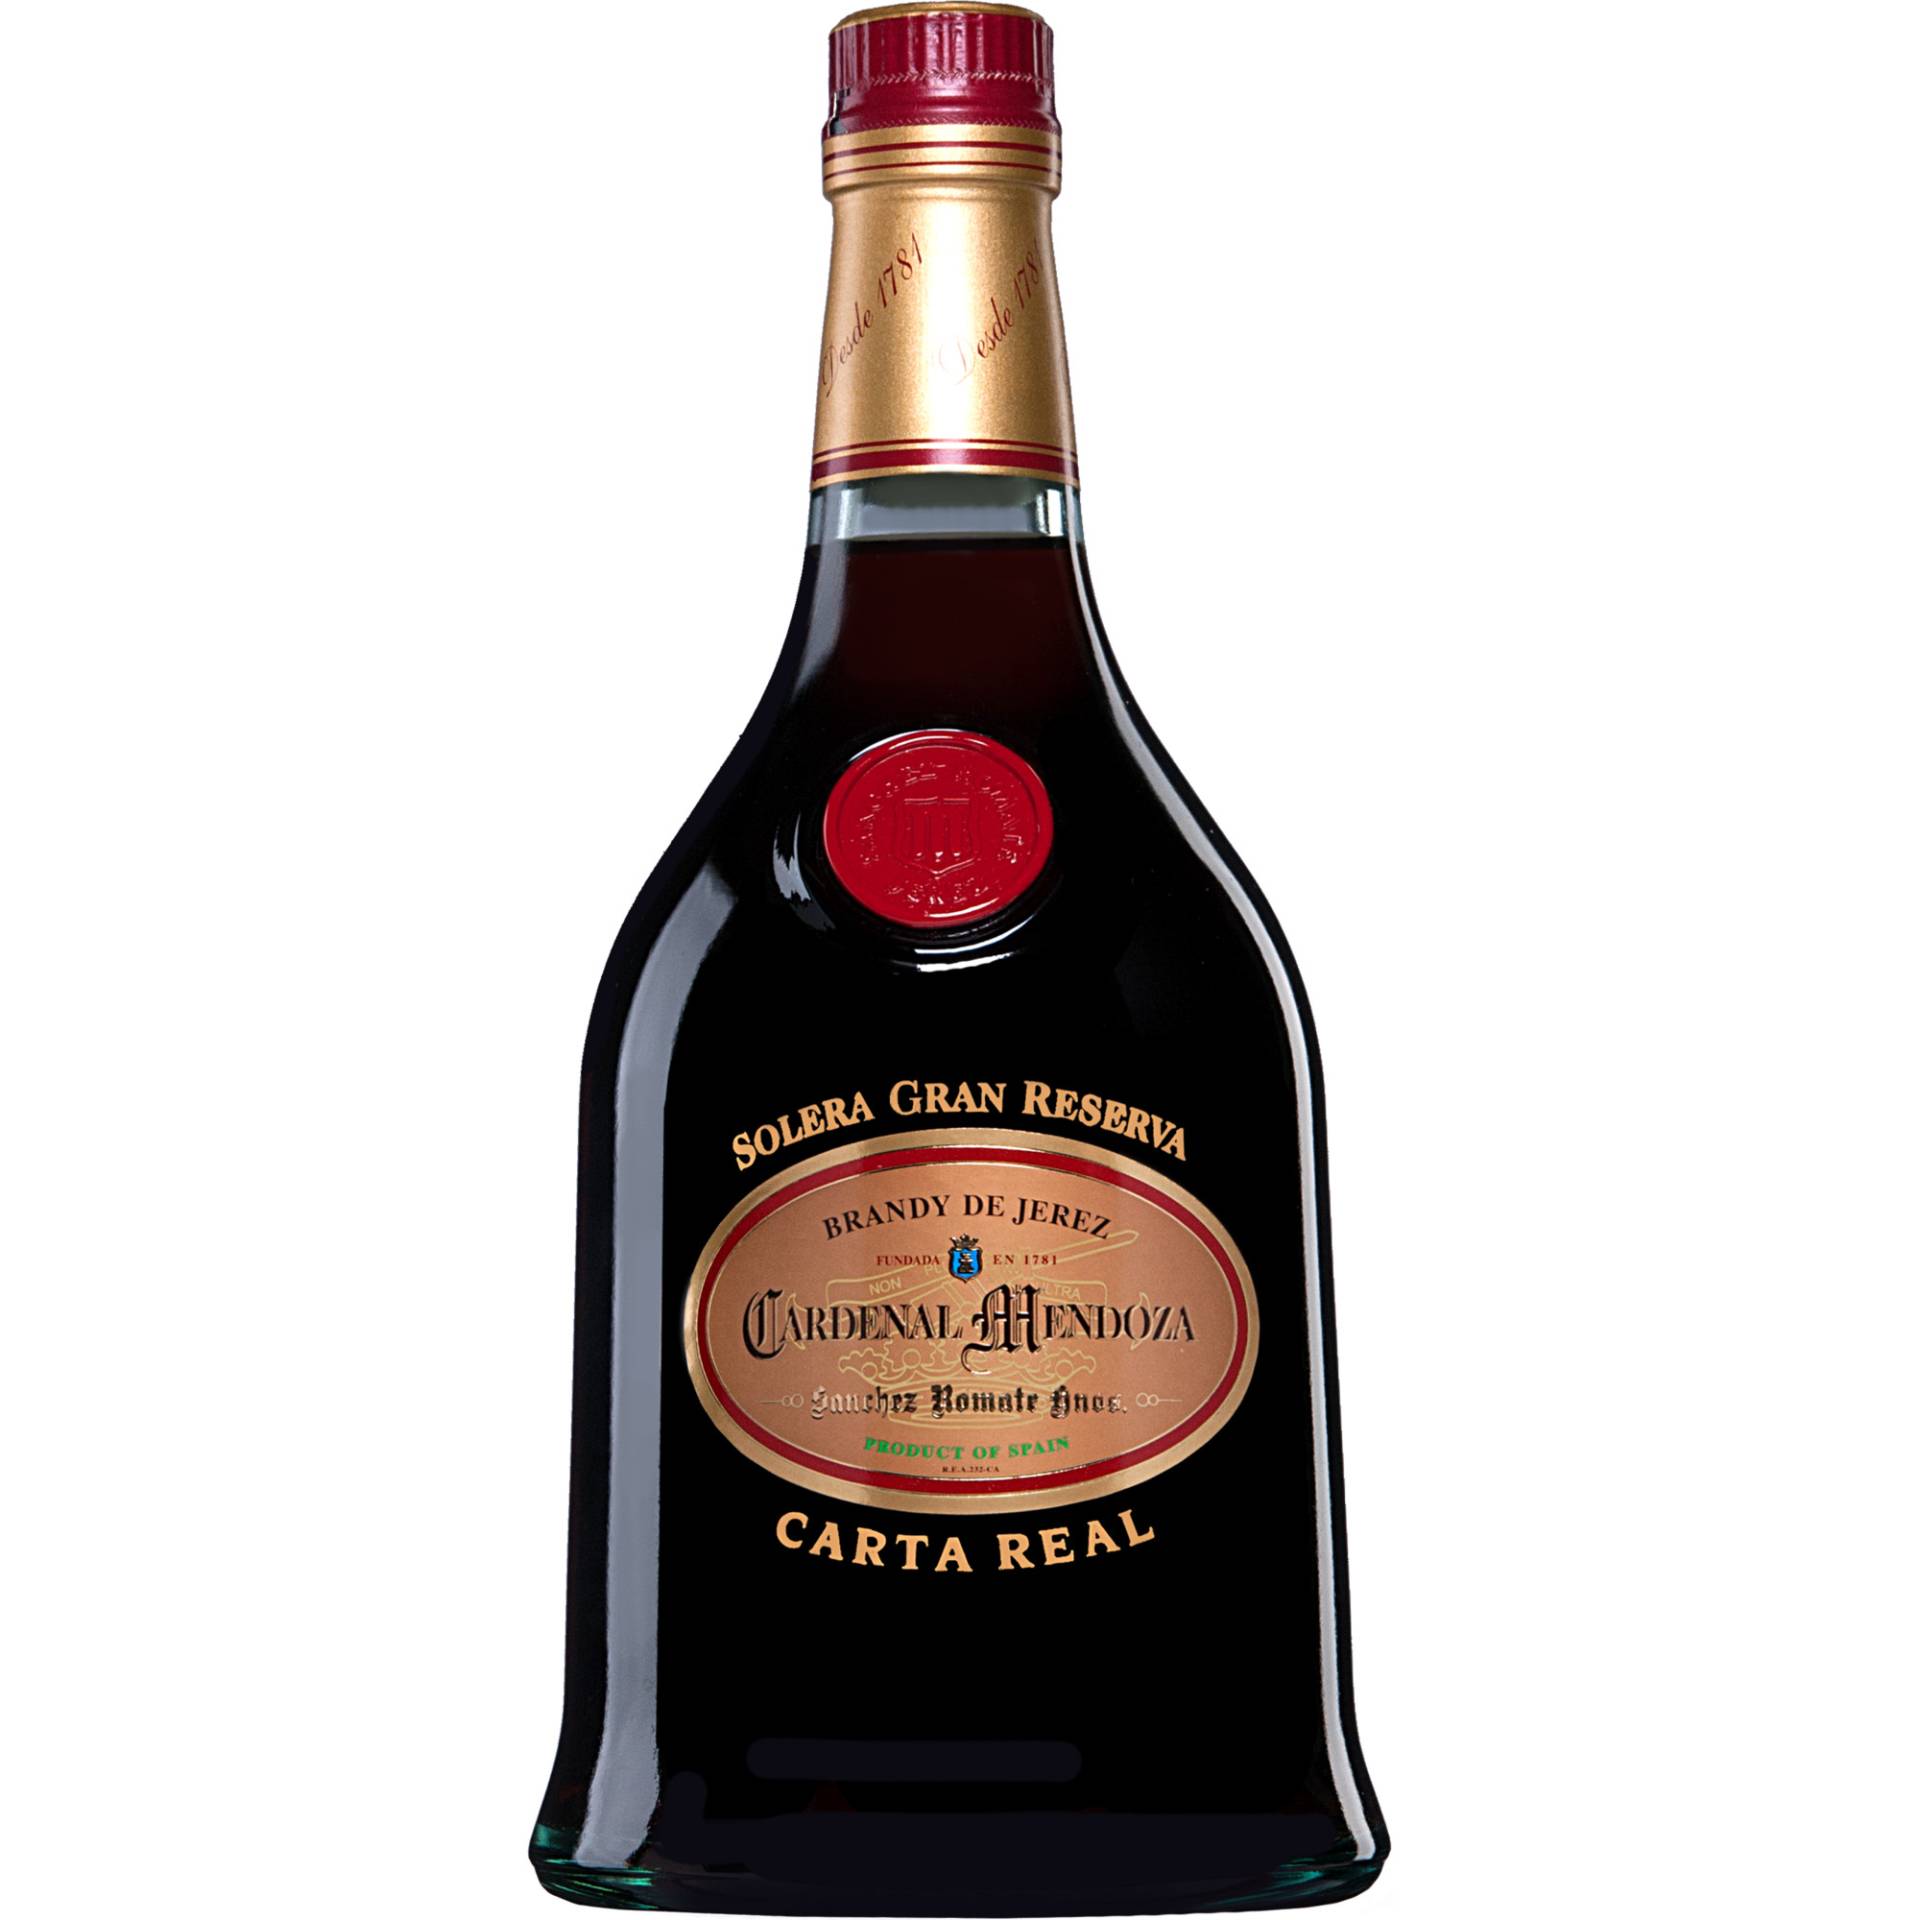 Brandy Cardenal Mendoza »Carta Real « - 0,7 L. Gran Reserva  0.7L 40% Vol. Brandy aus Spanien von Romate